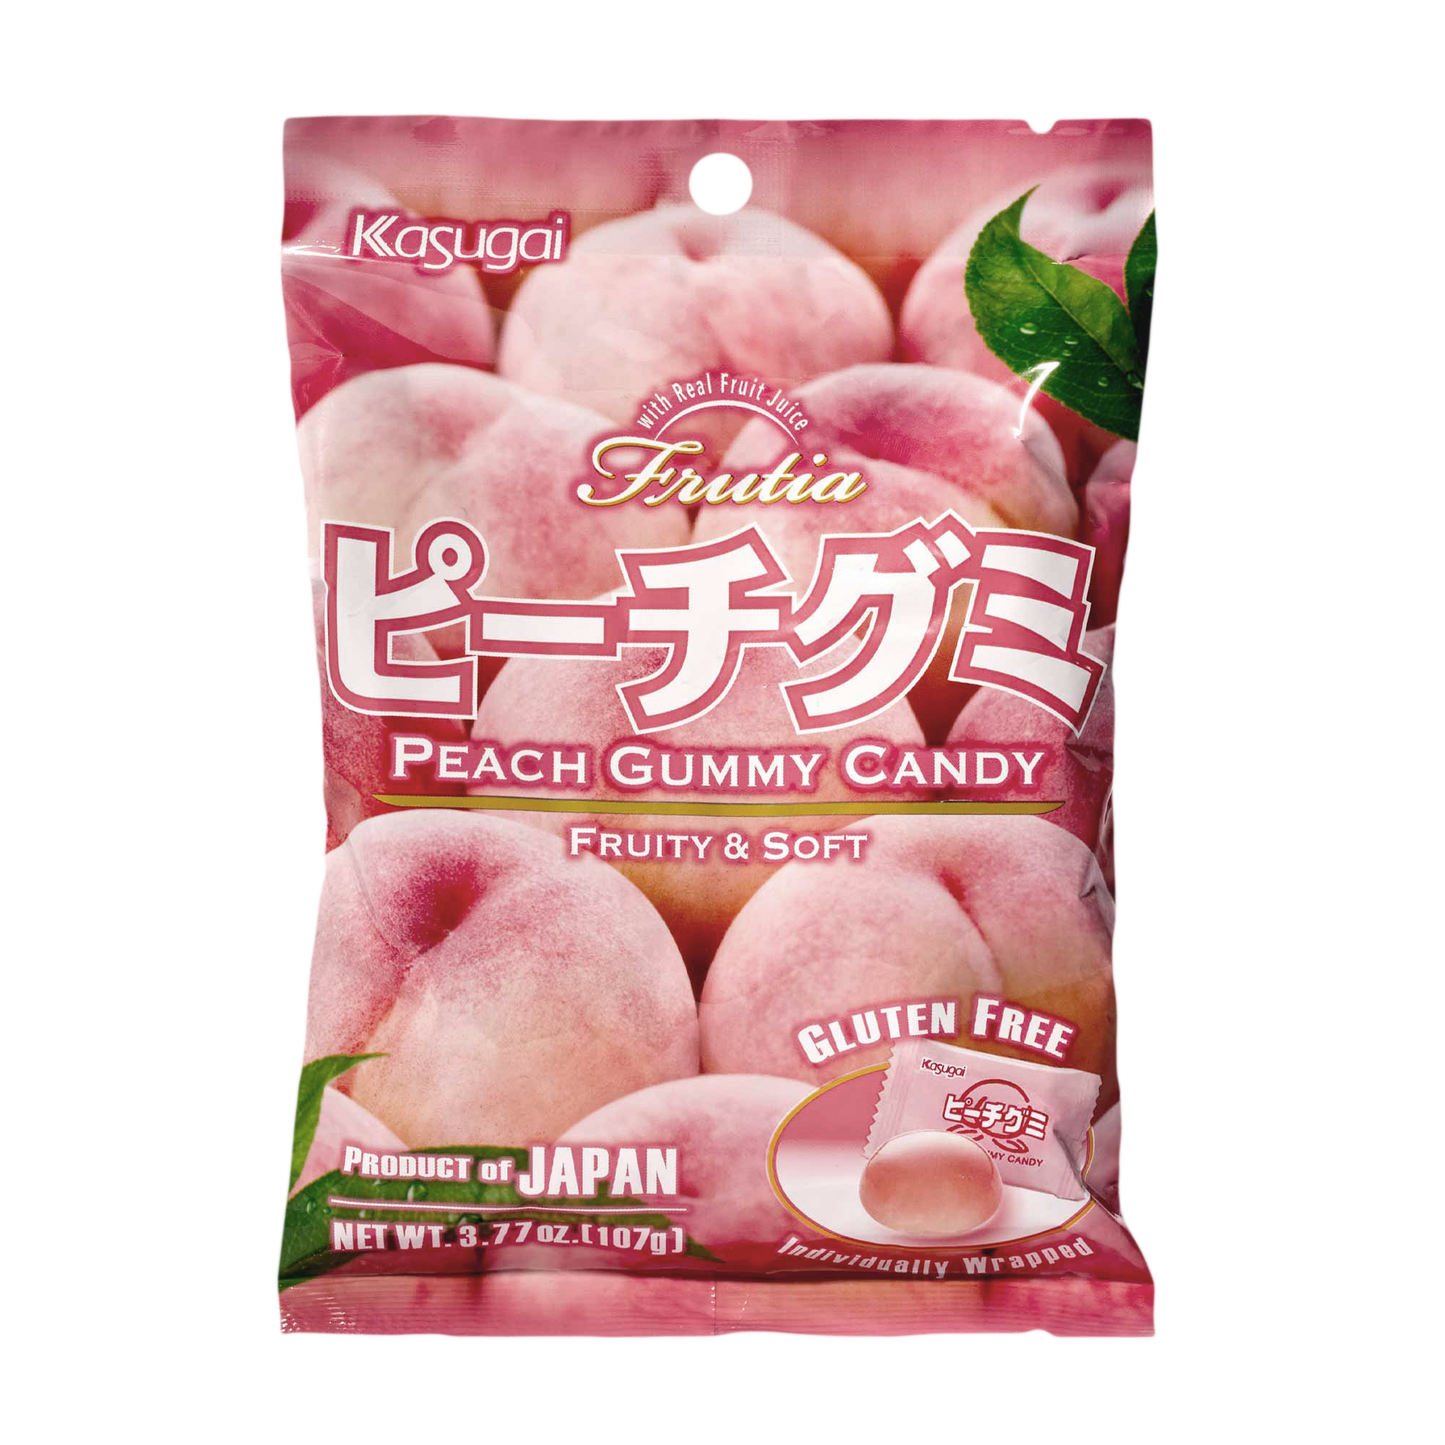 Kasugai Gummy Candy